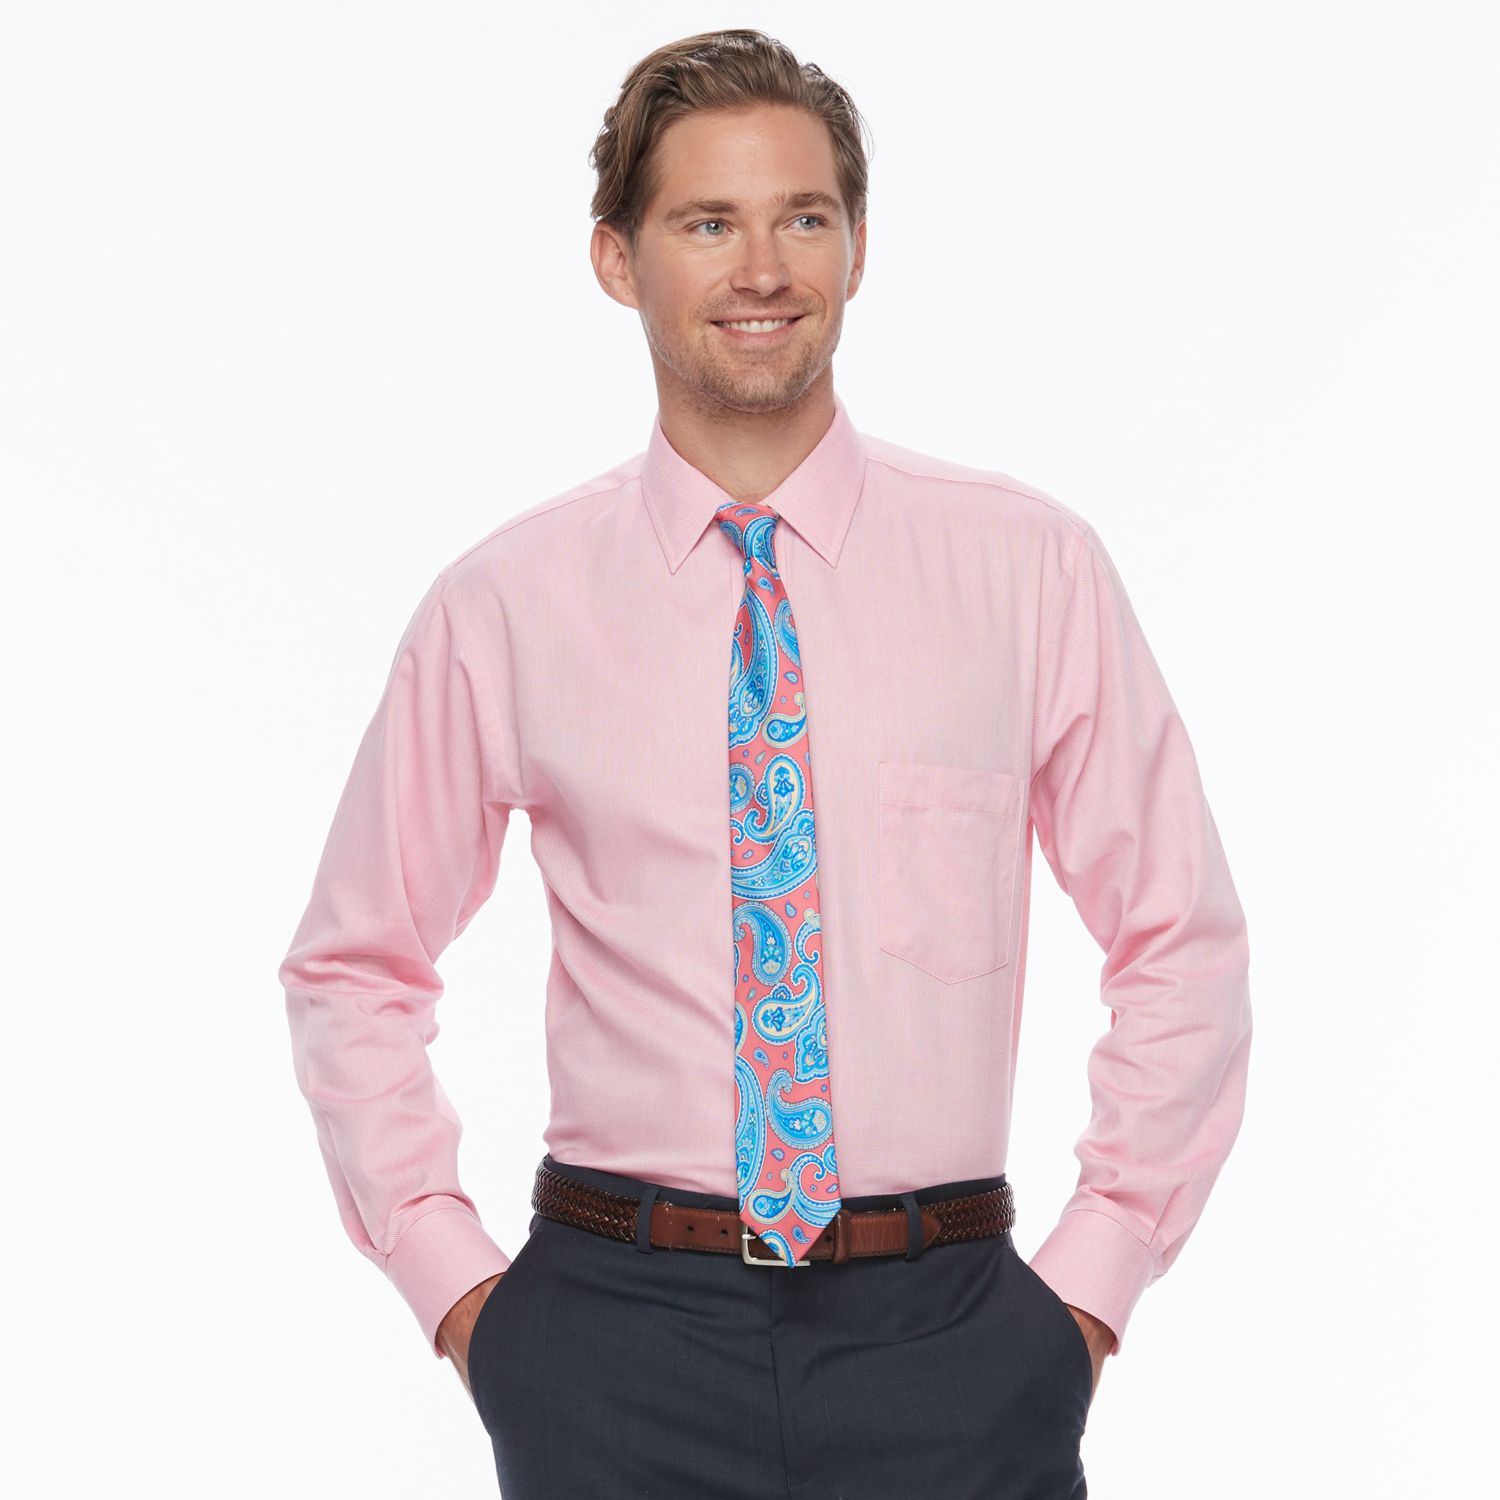 Men's Chaps Dress Shirt ☀ Tie Combination